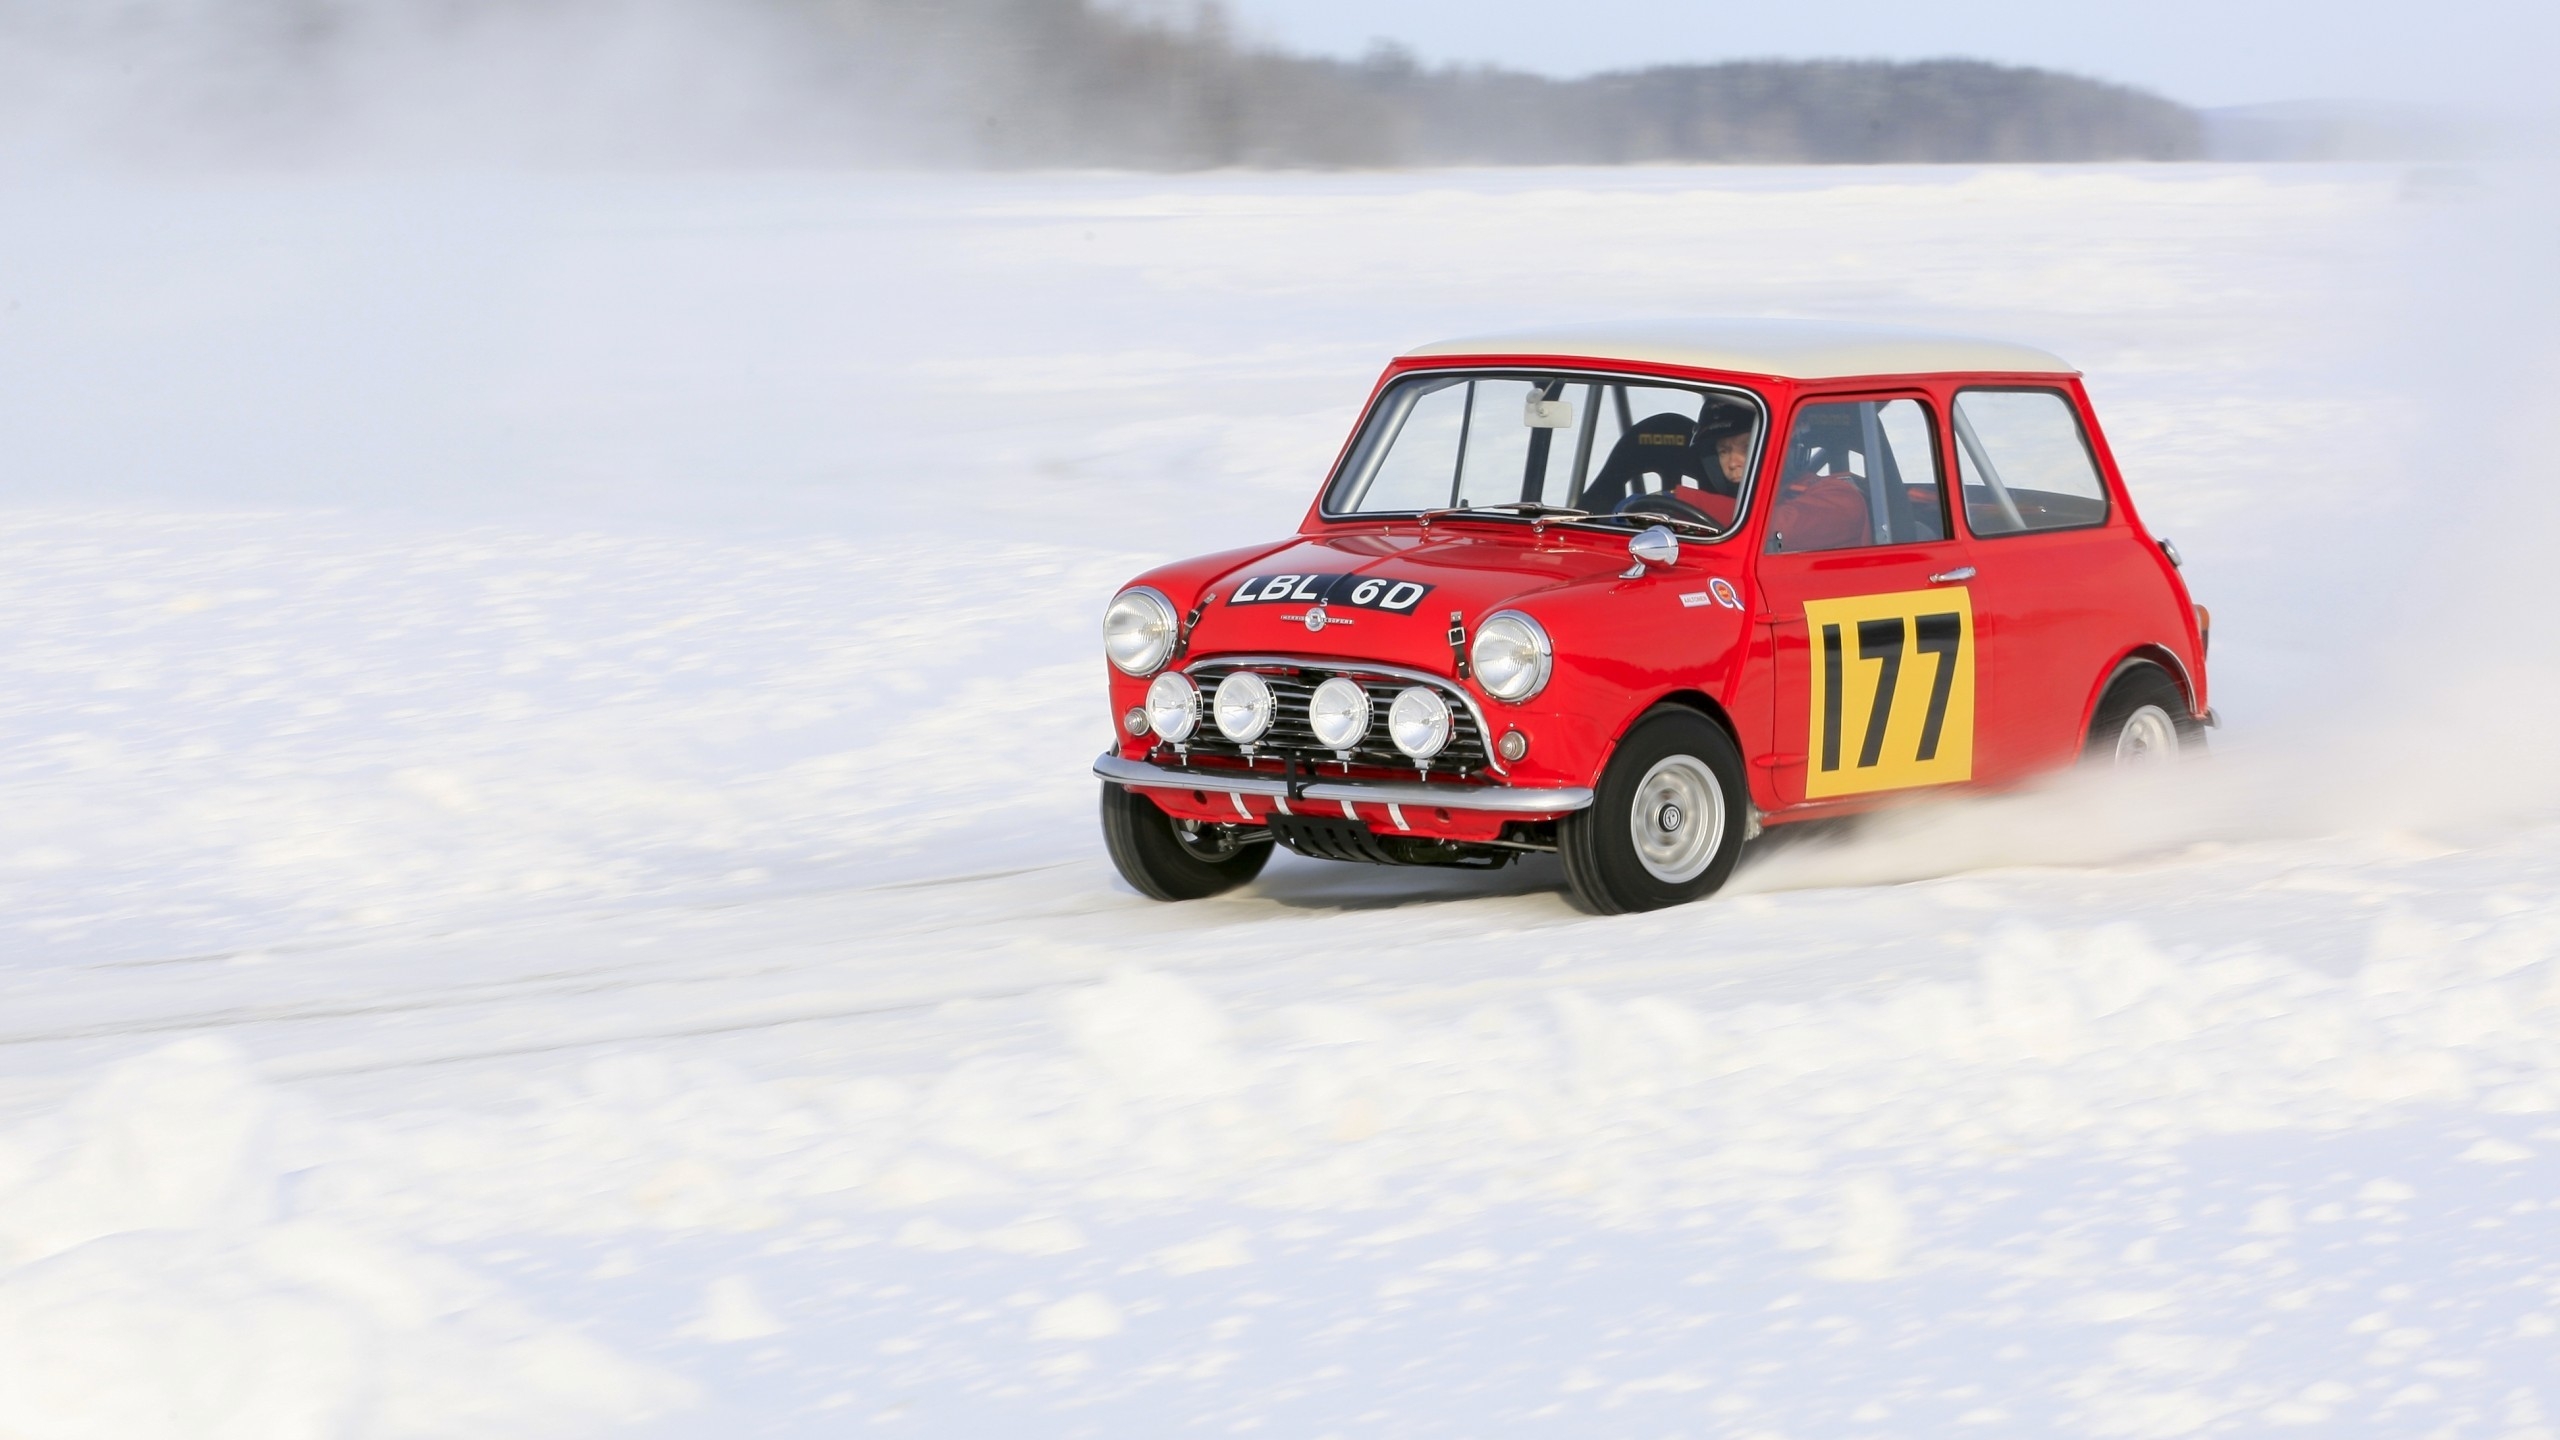 Mini Snow Race for 2560x1440 HDTV resolution